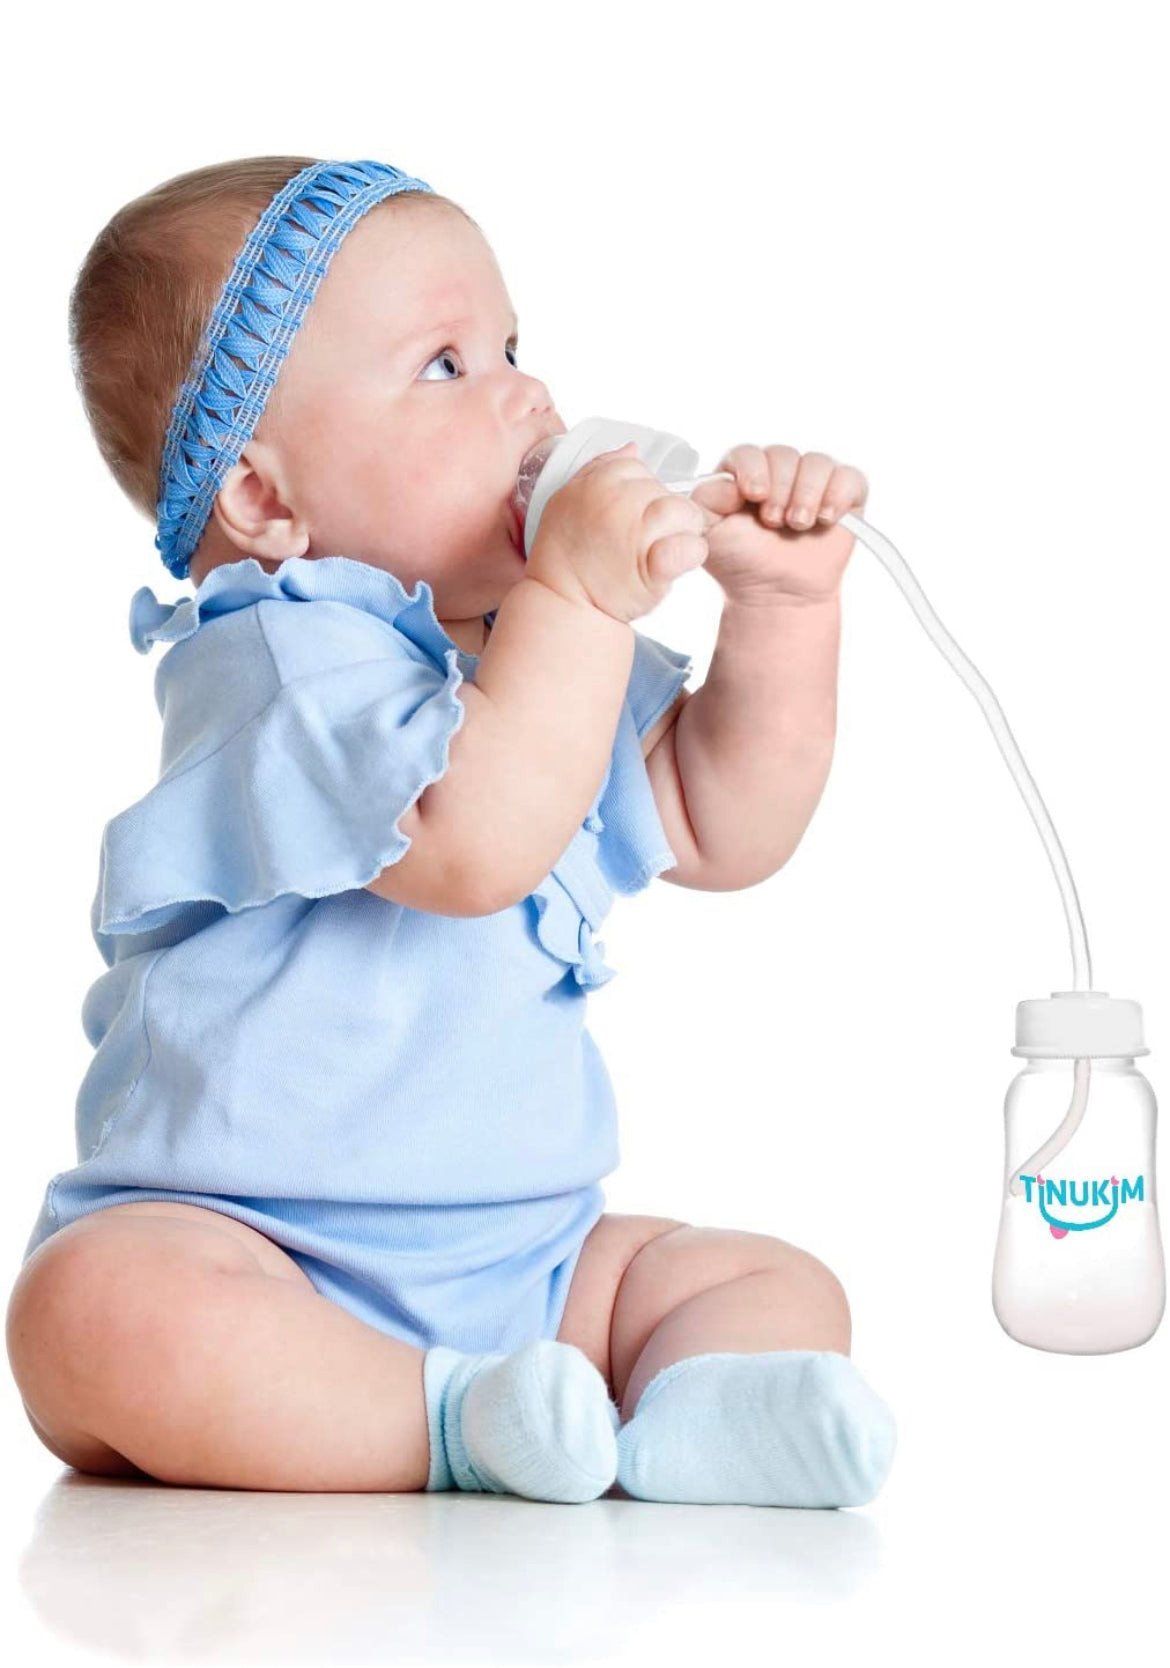 Tinukim iFeed 4 Ounce Self Feeding Baby Bottle with Tube - Handless Anti-Colic Nursing System, White - 2-Pack.